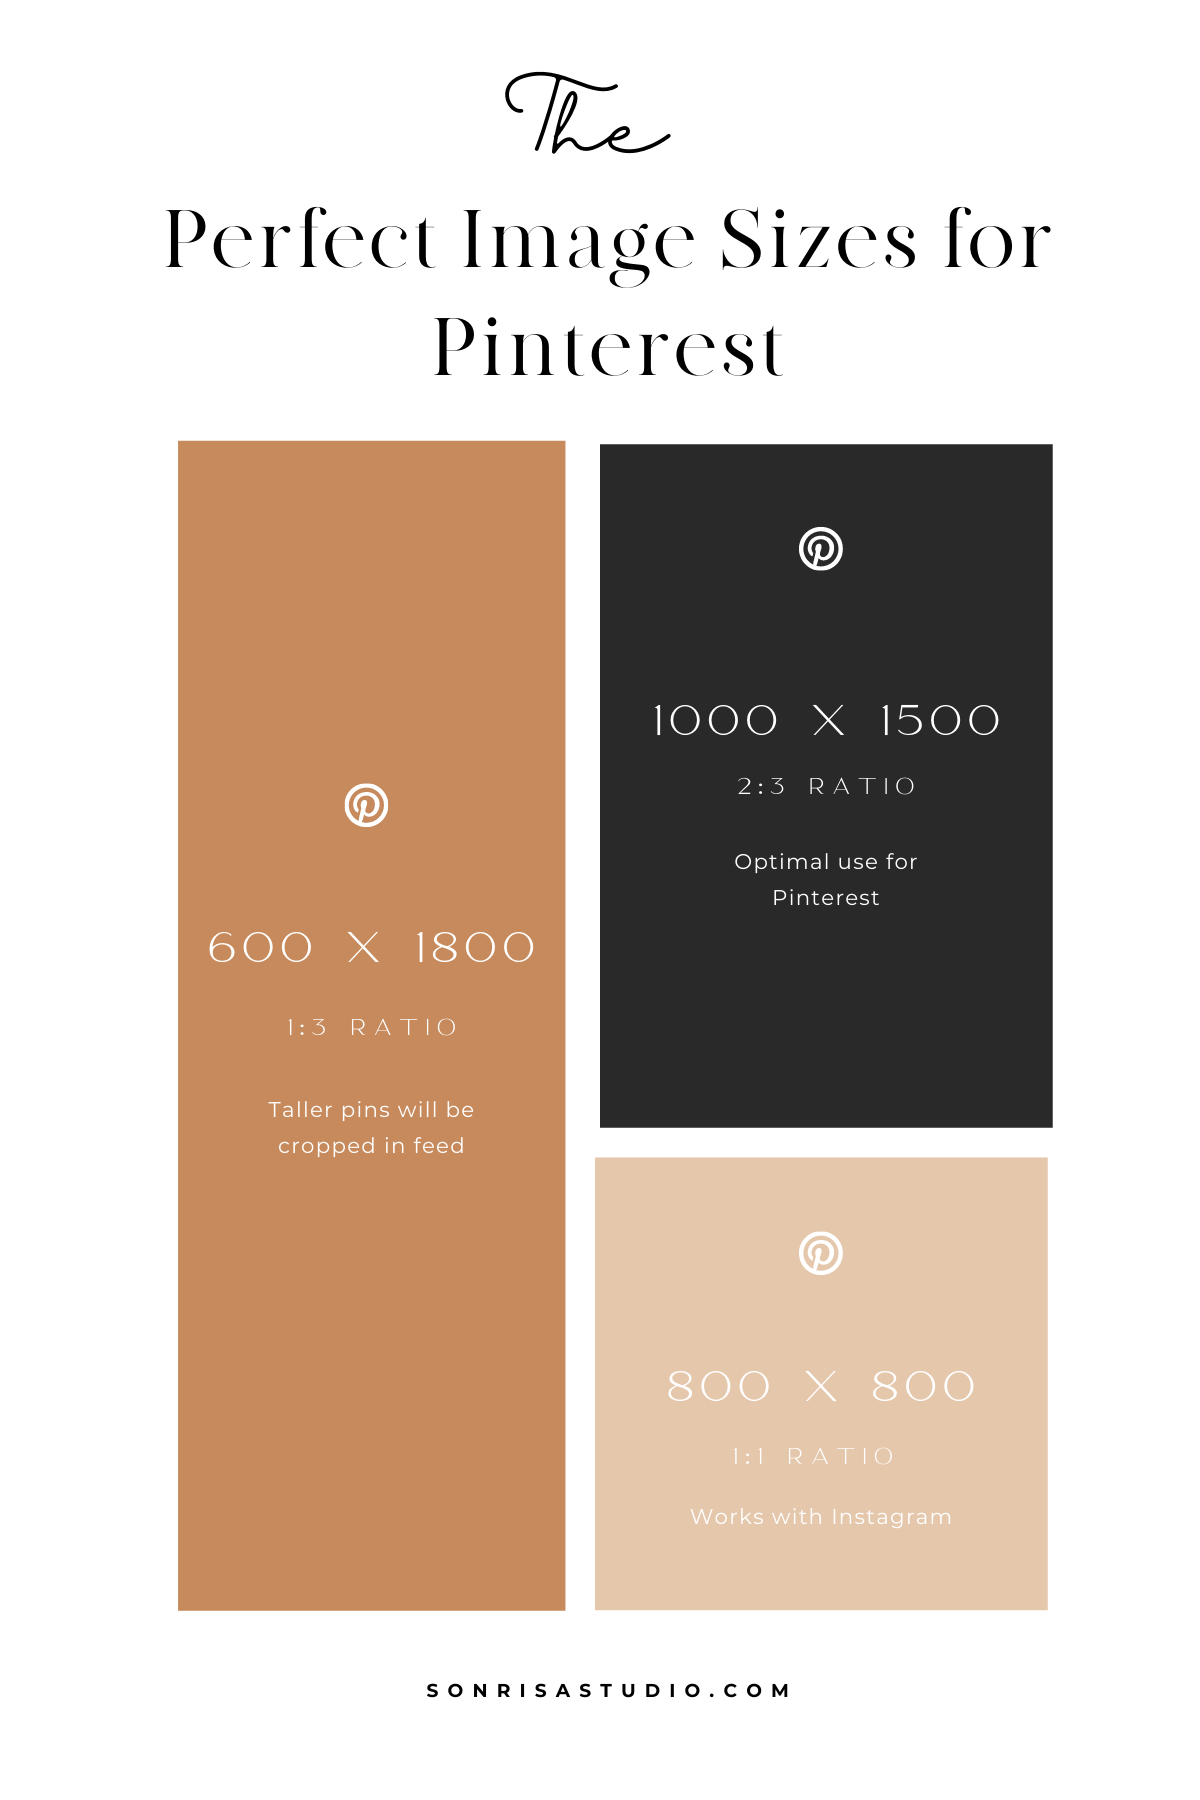 Pinterest Pin Sizing Guide